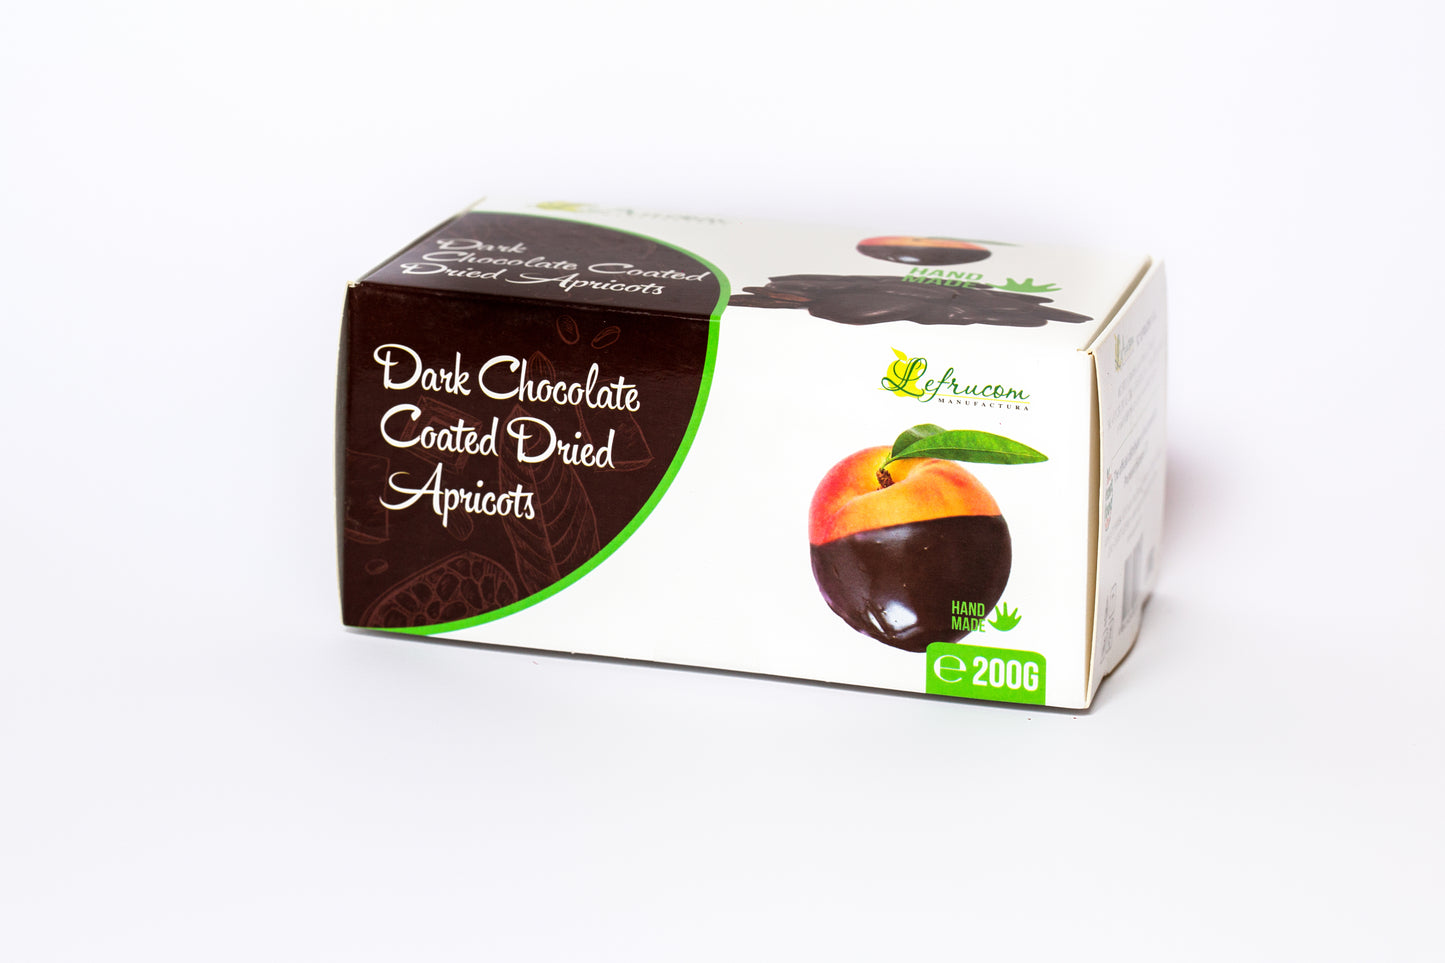 Dark Chocolate Coated Dried Apricots "Lefrucom"